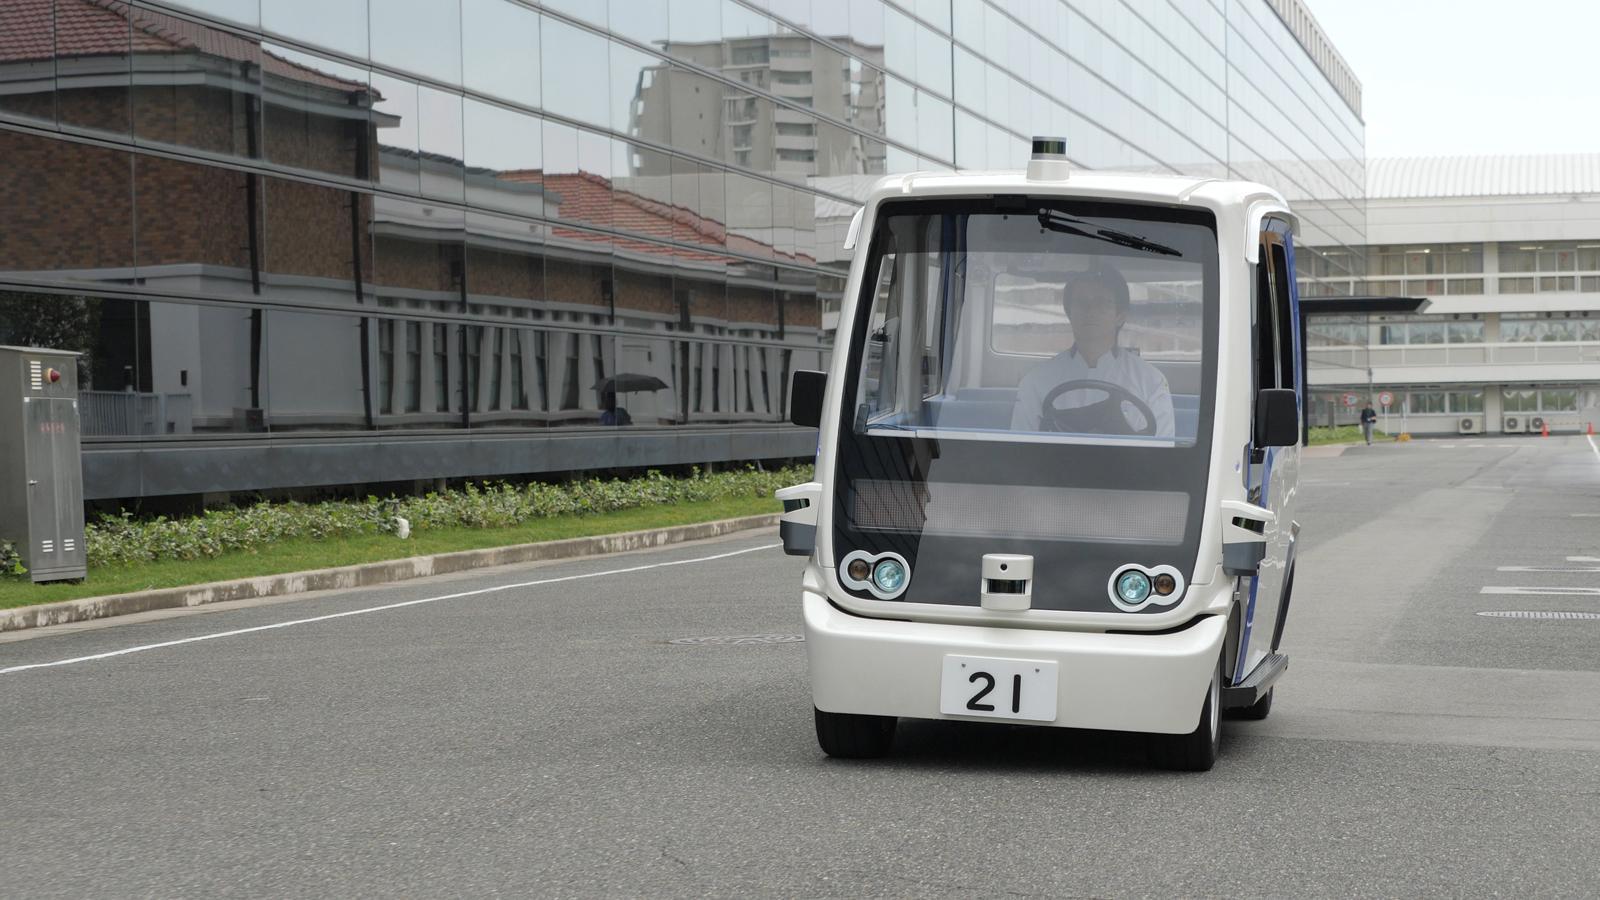 Photo: Panasonic launched autonomous ride share service around its headquarters.